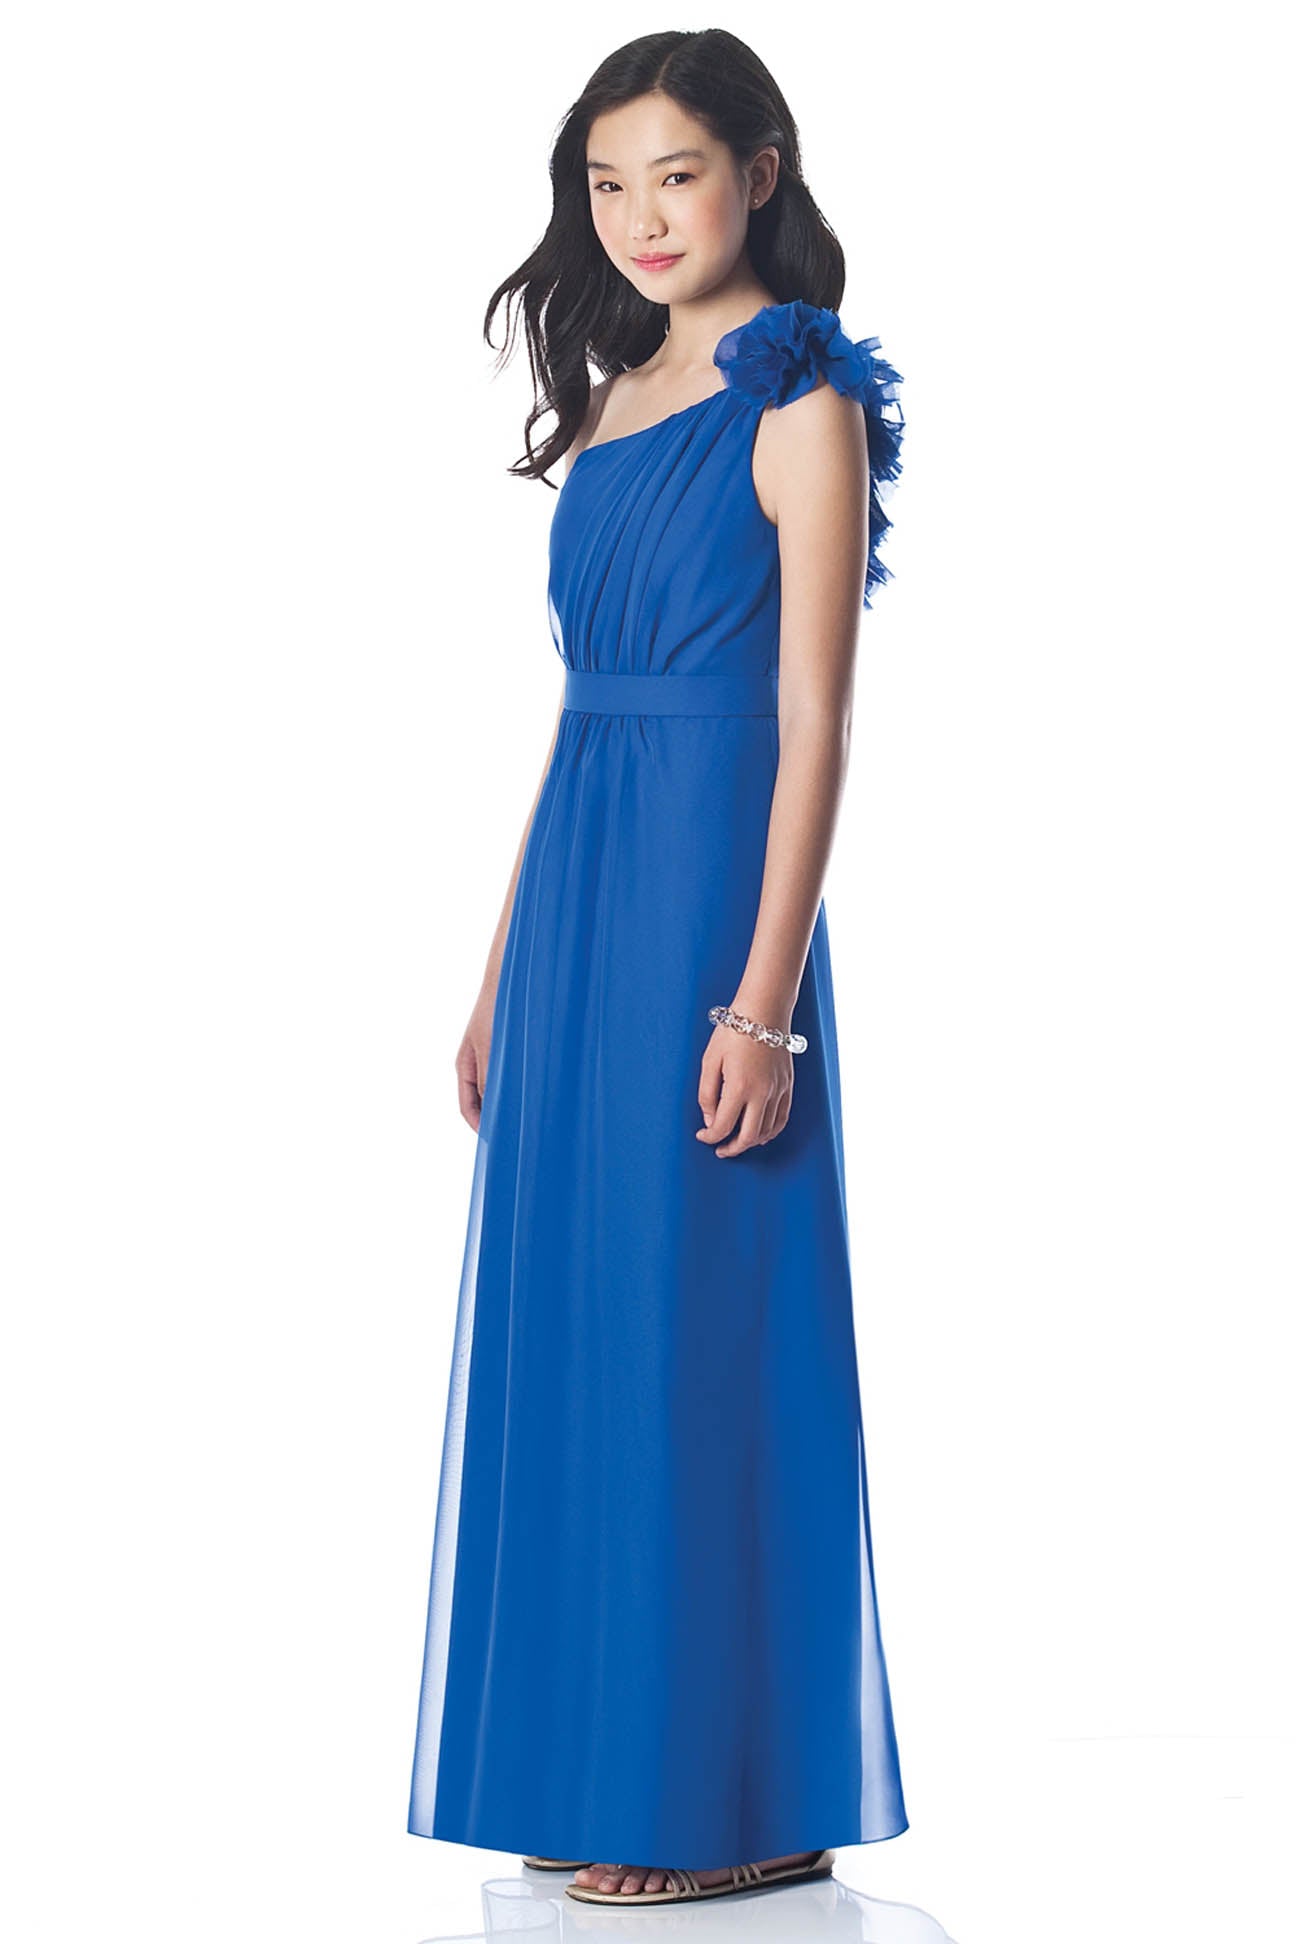 Ocean Blue One Shoulder Floor-length Junior Bridesmaid Dress(UKJBD03-002)